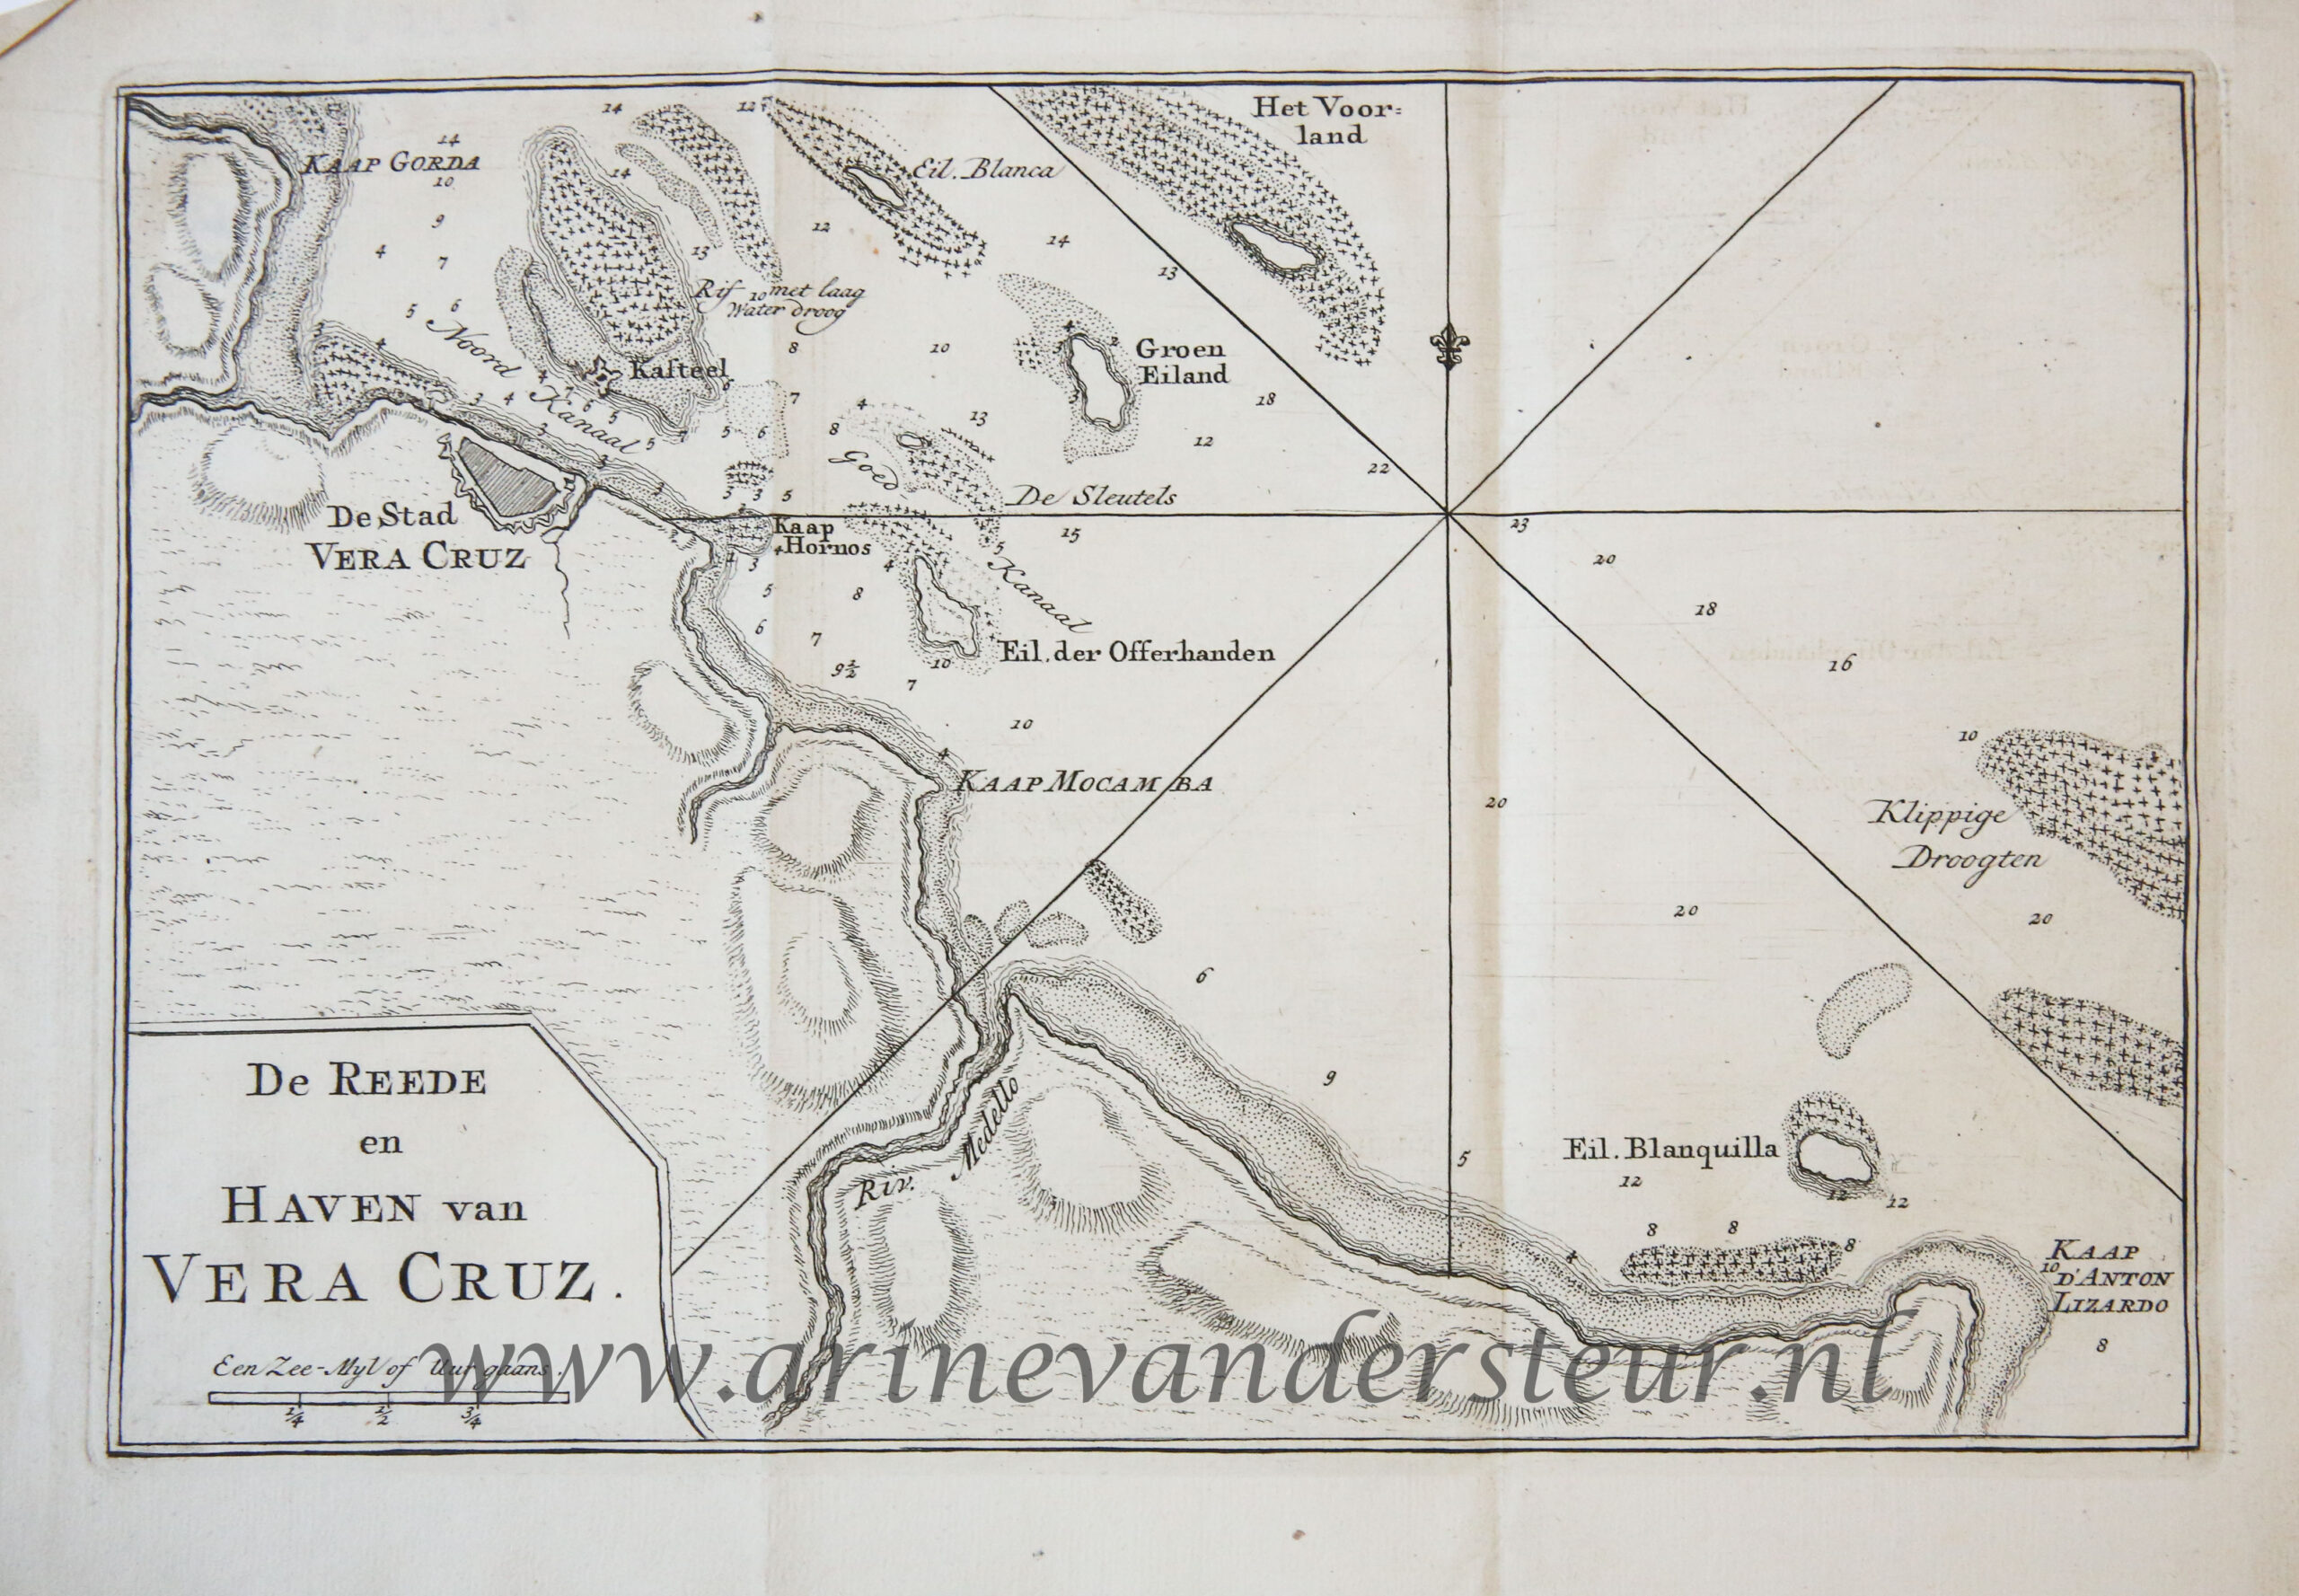 [Antique print, cartography] De Reede en Haven (harbour) van Vera Cruz (Mexico), published 1765.